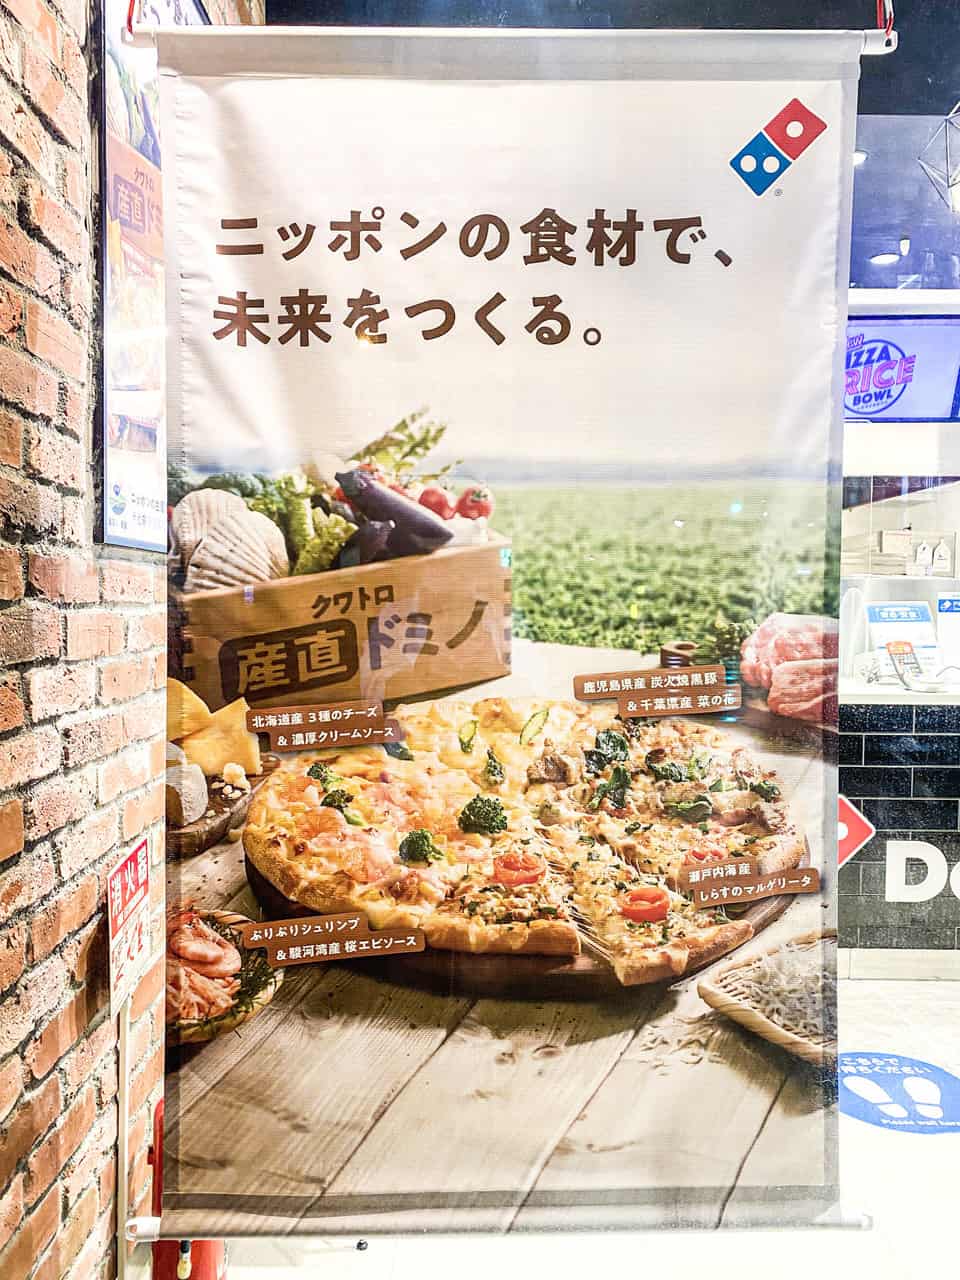 Cartel publicitario Domino's Pizza